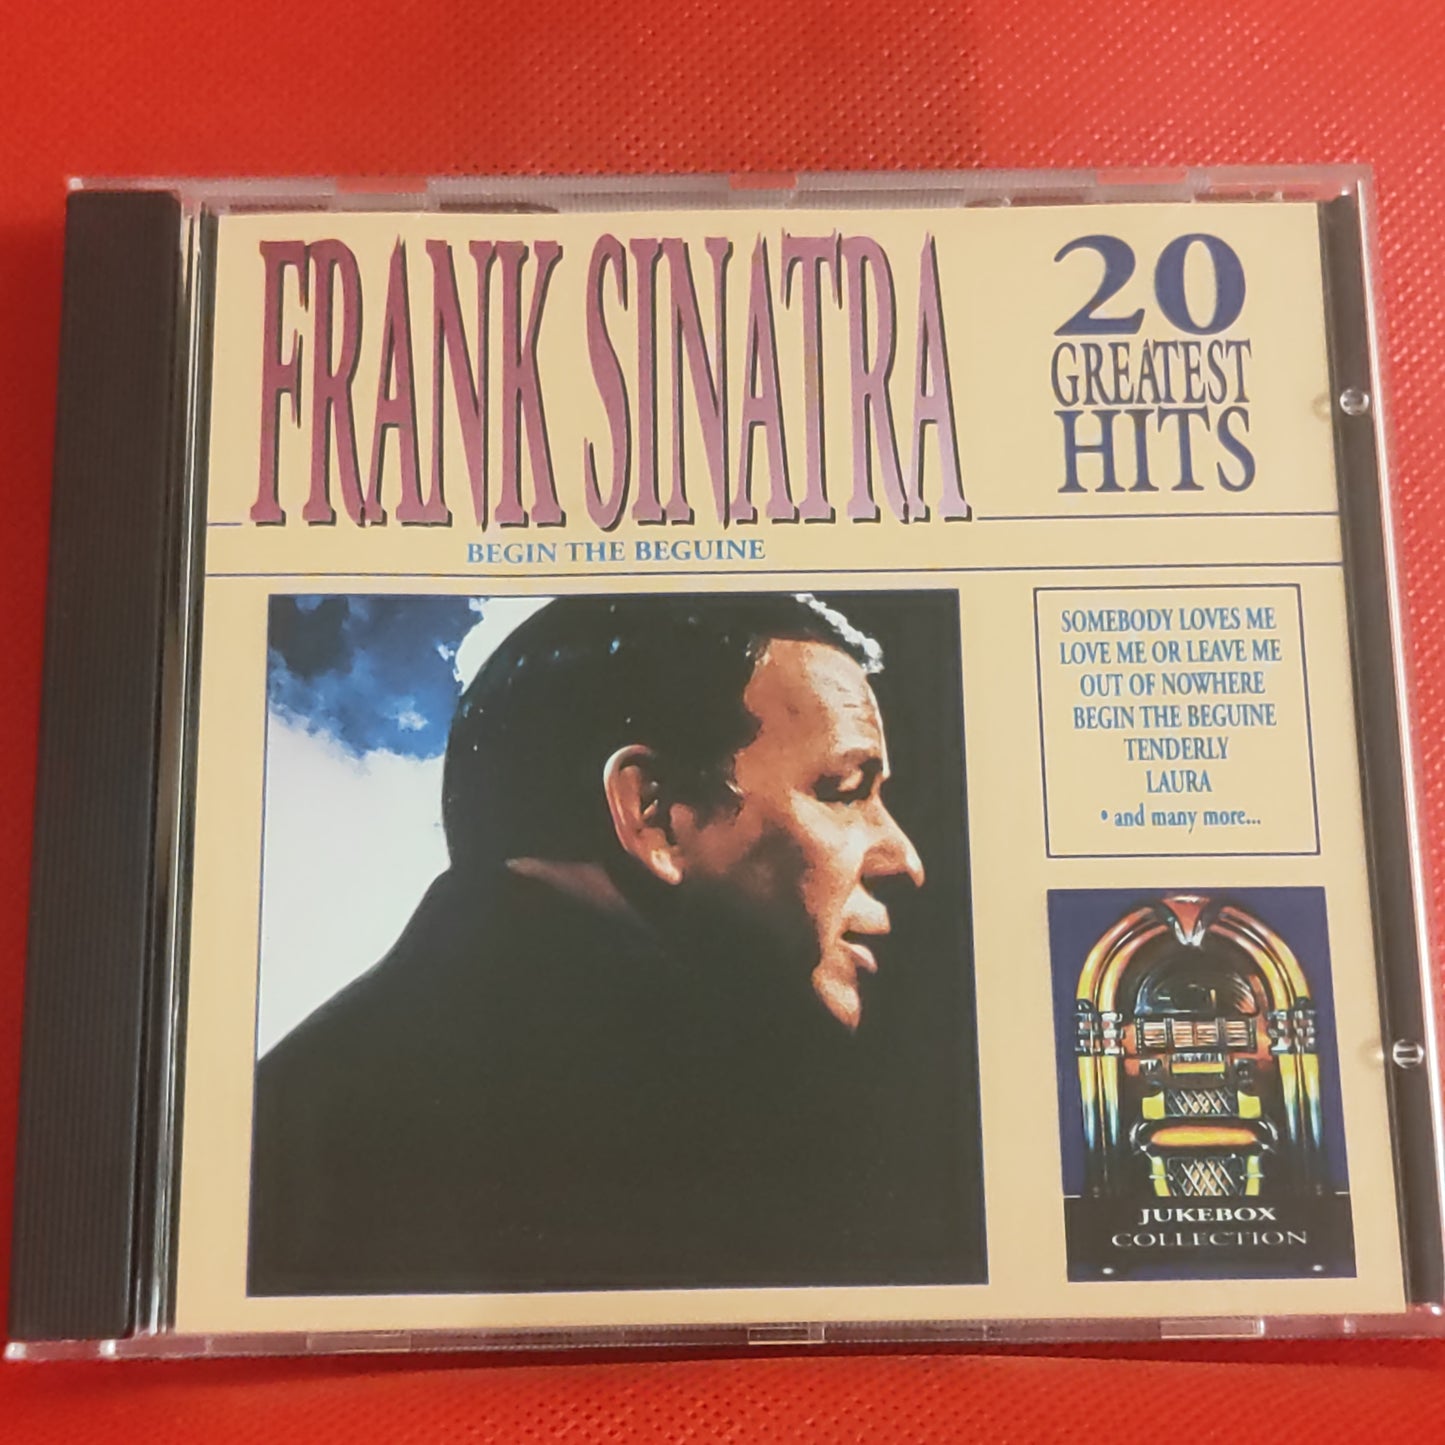 Frank Sinatra - Begin the Beguine -  20 greatest hits